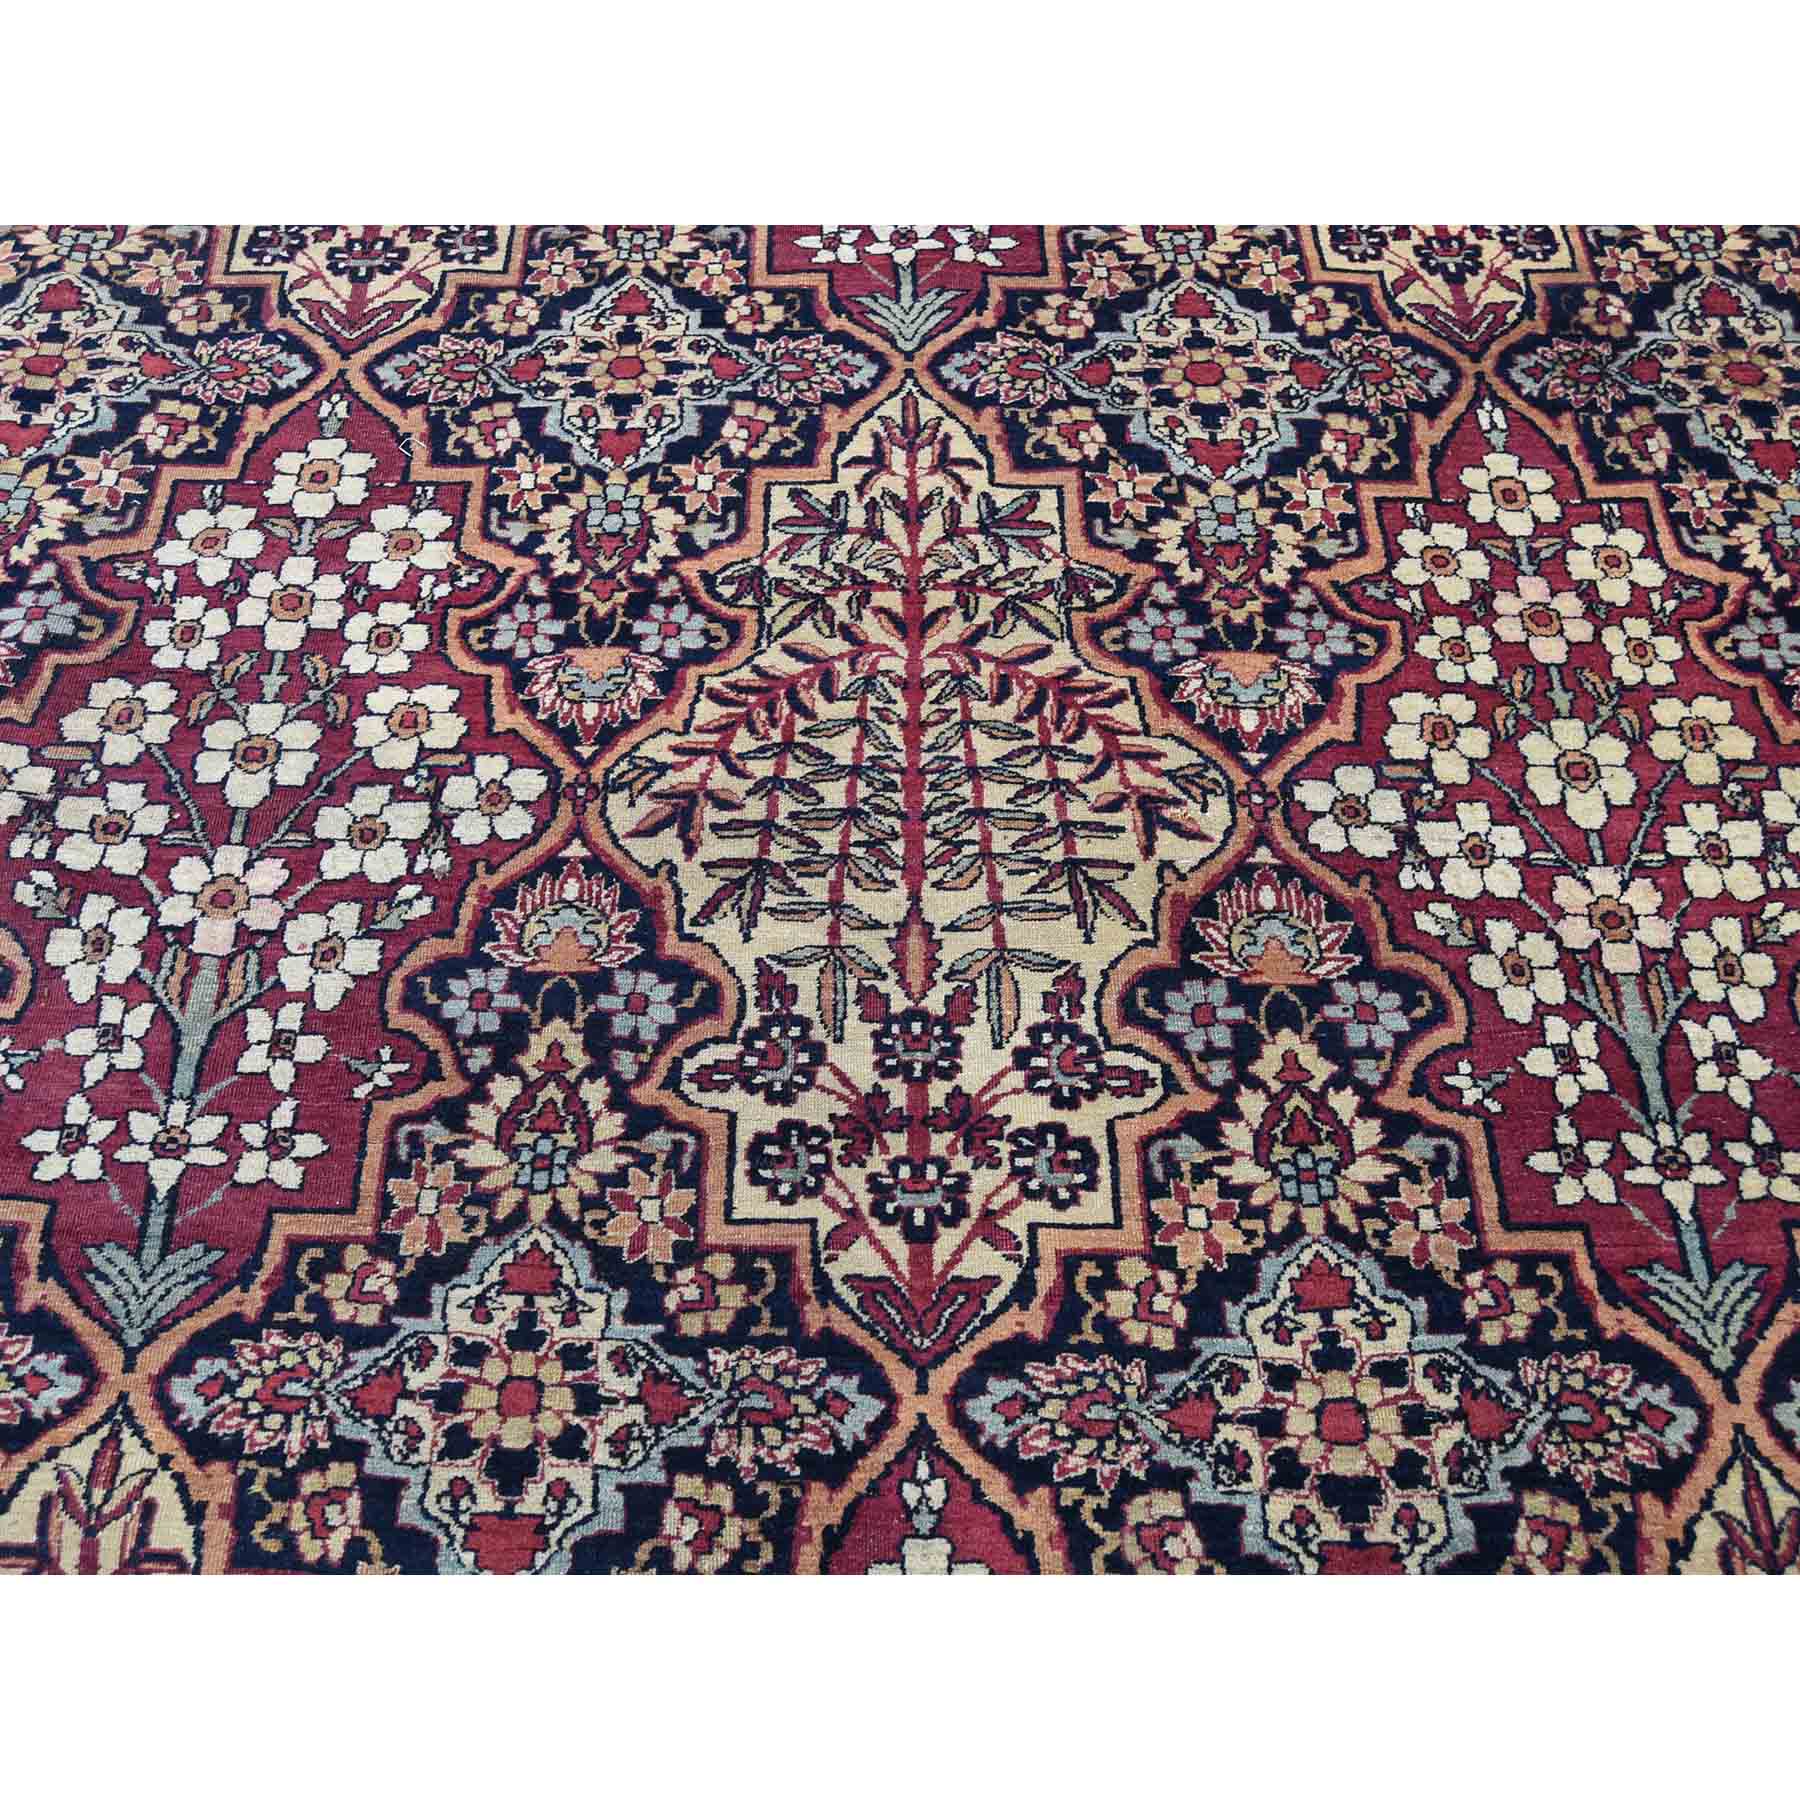 14'x16'9" Antique Persian Kerman Shah Good Condition Even Wear Hand Woven Oversize Oriental Rug 